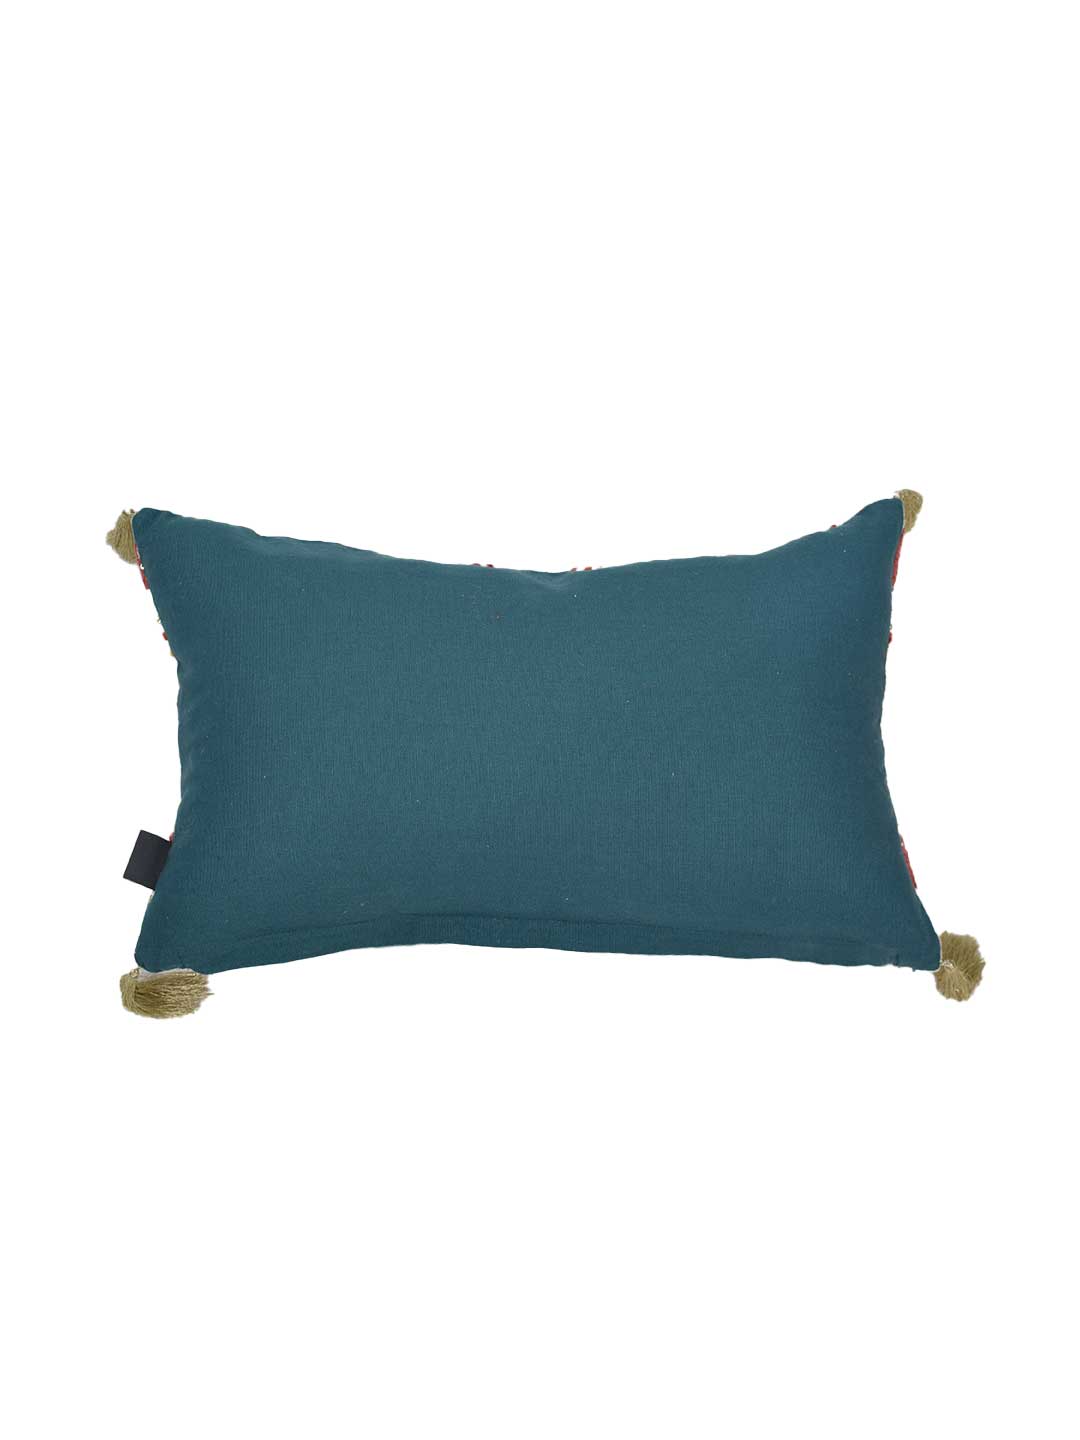 Summer Garden Cushion Cover with Filler 30x50cm